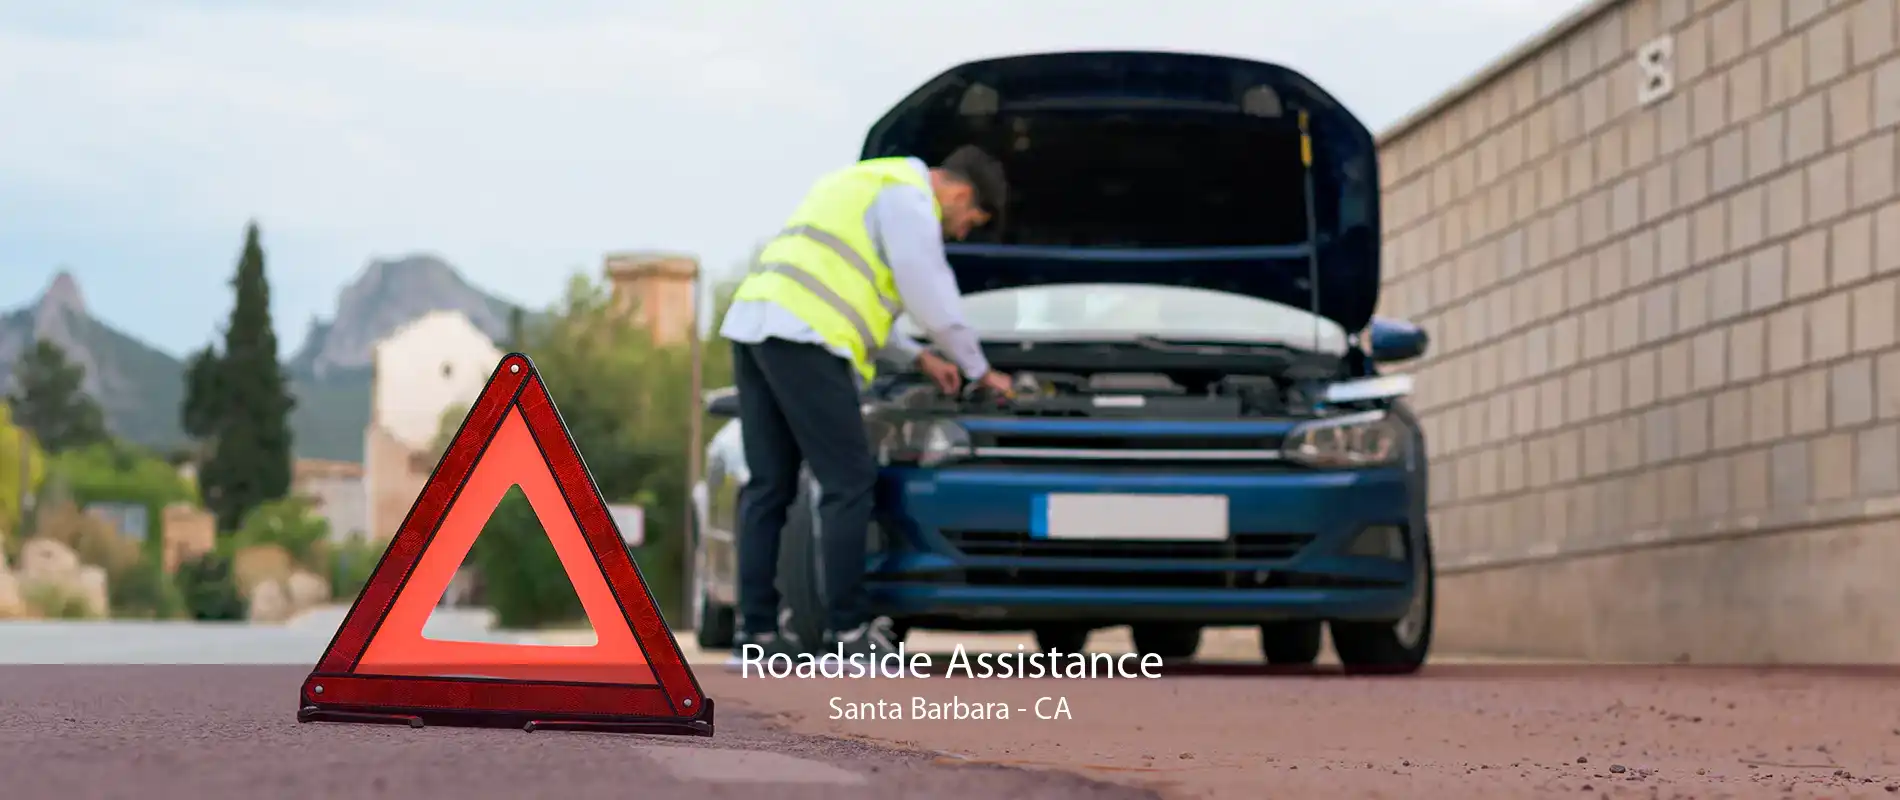 Roadside Assistance Santa Barbara - CA